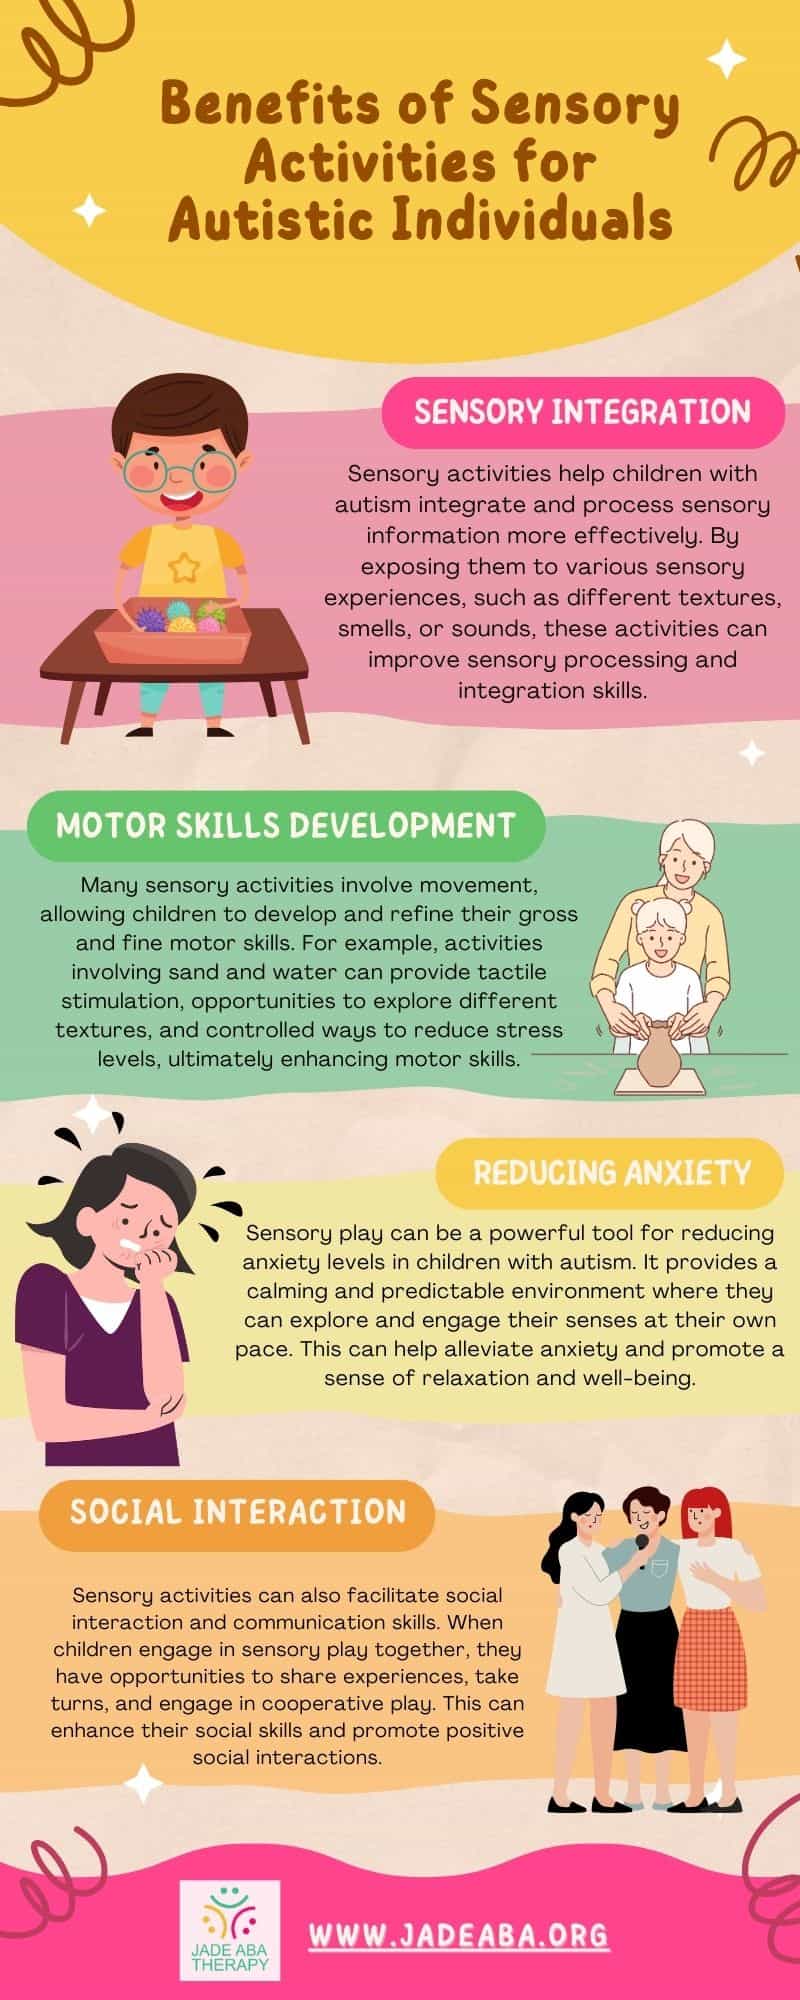 Benefits of sensory activities for autistic individulas